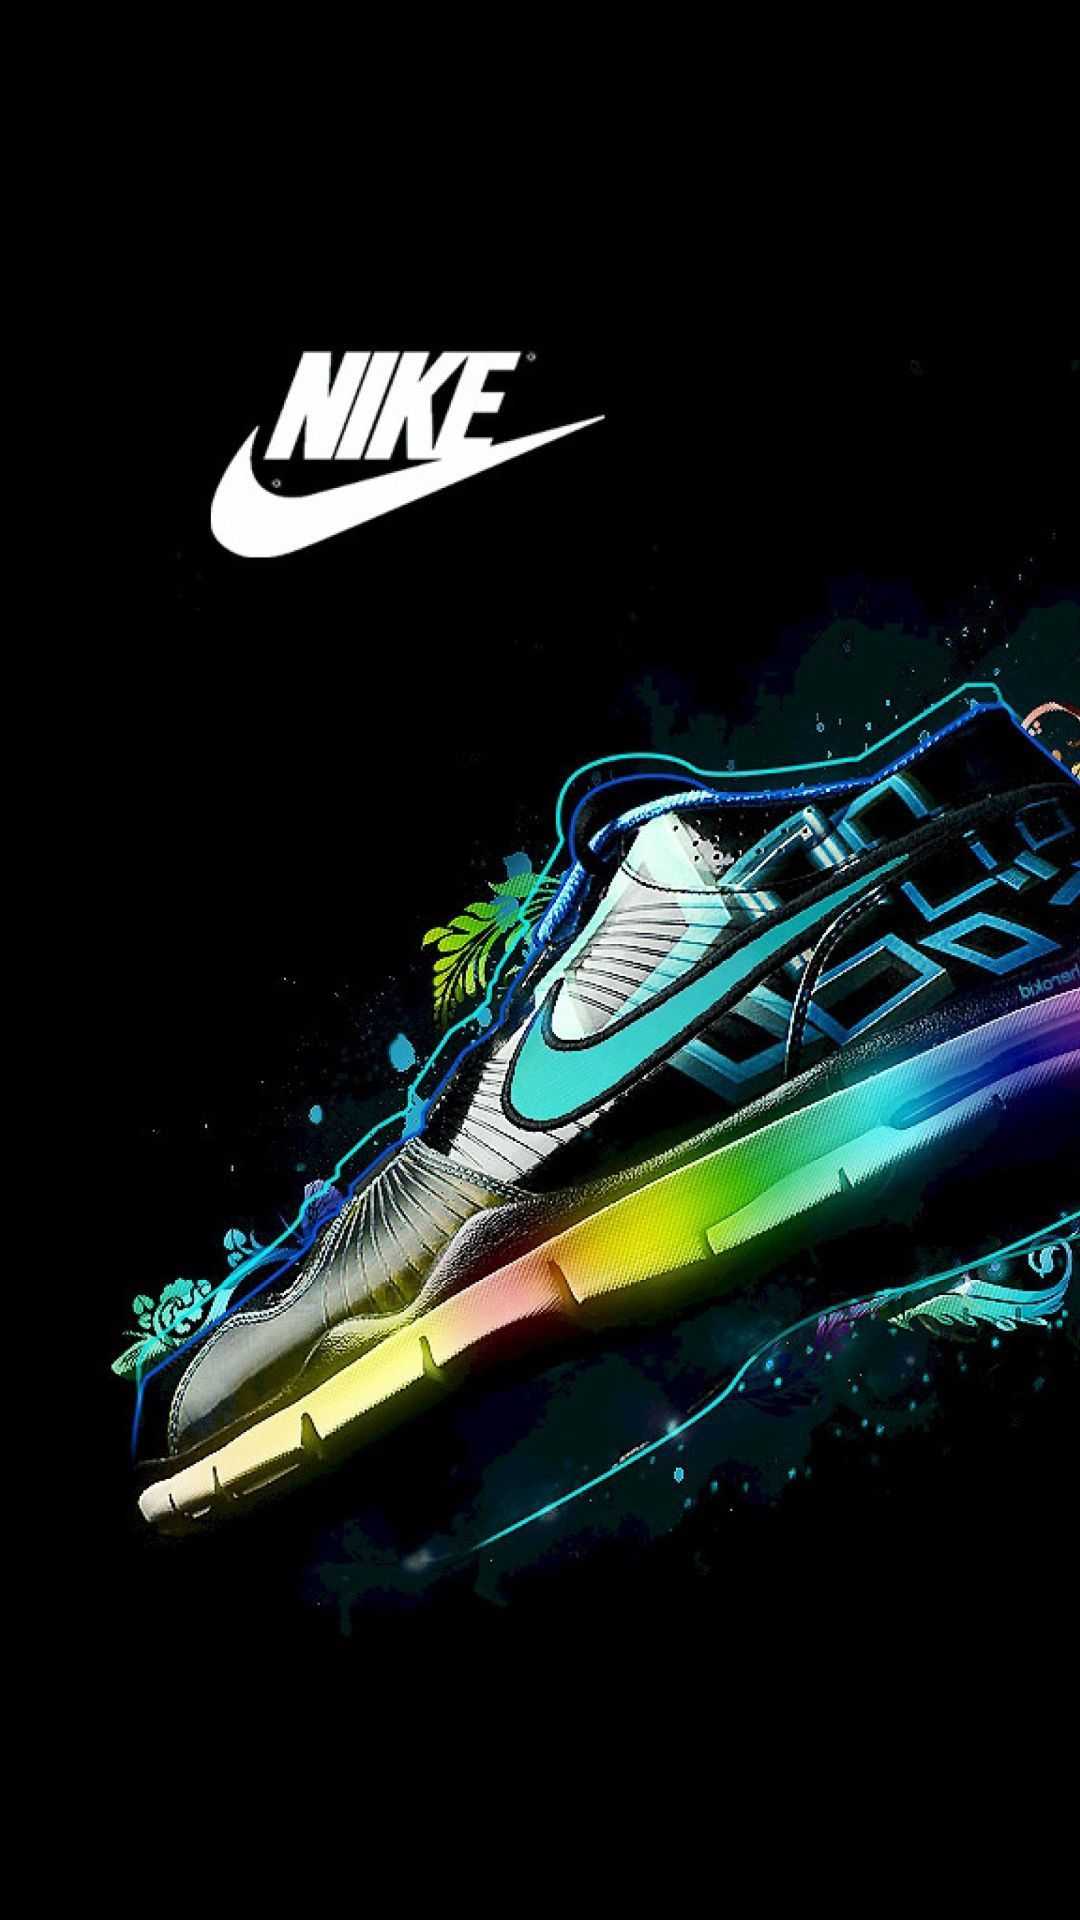 The nike shoe with a rainbow design - Nike